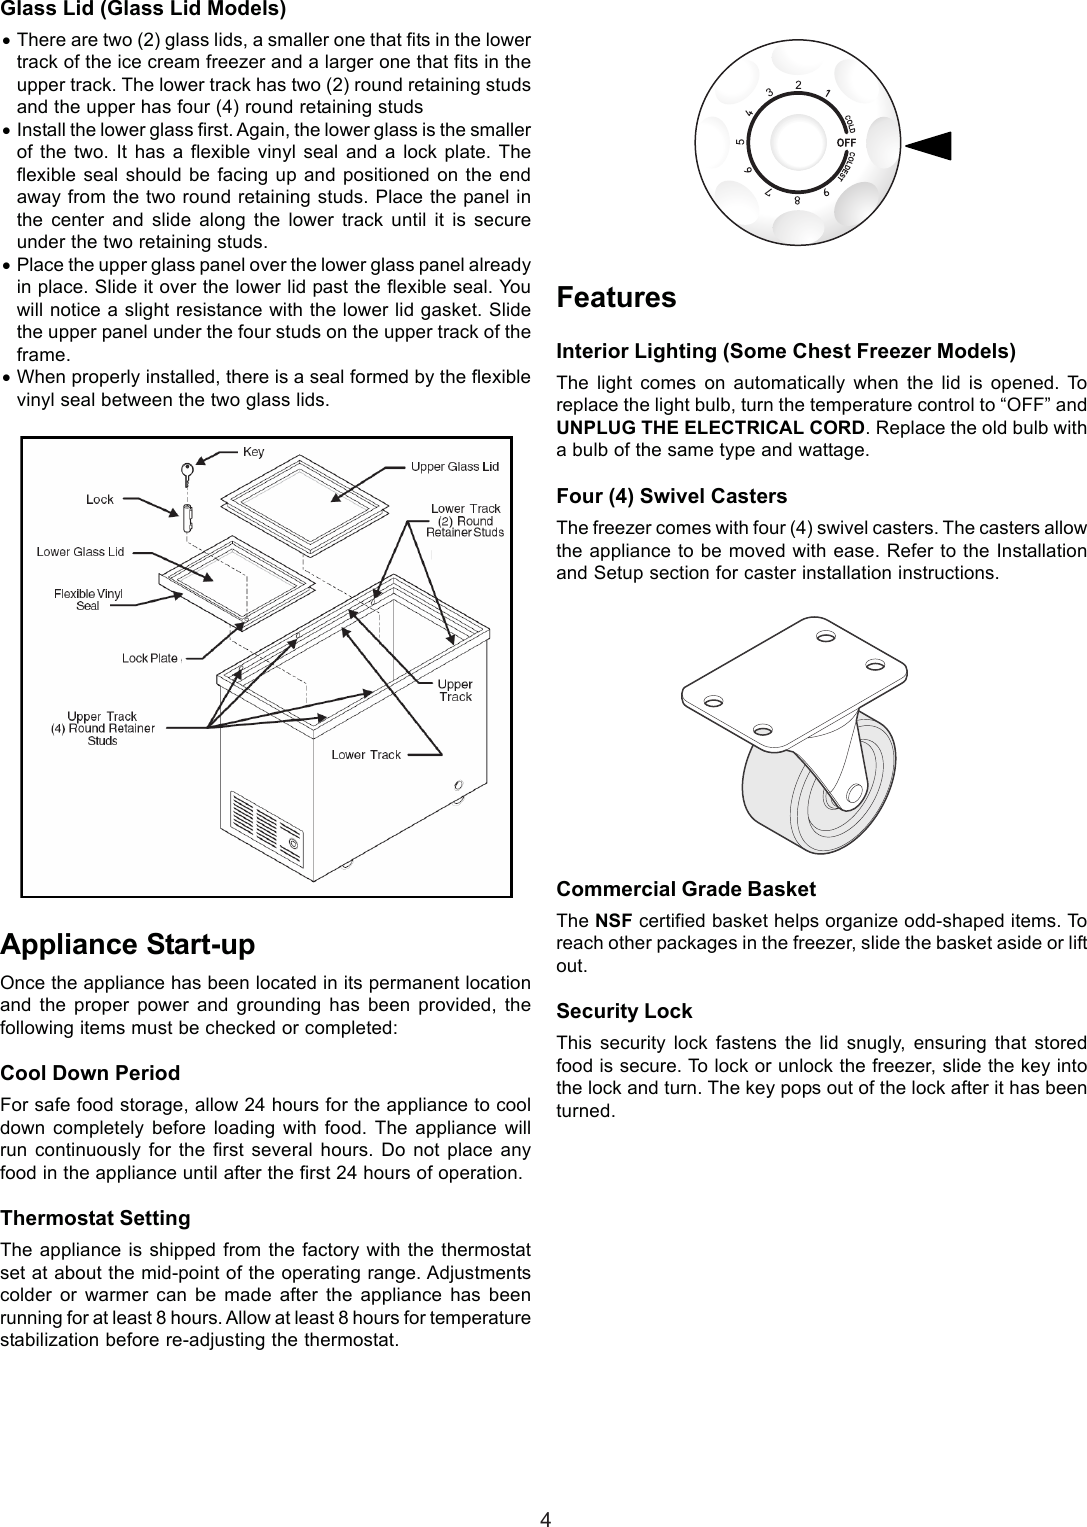 Page 4 of 11 - Frigidaire Frigidaire-7-Cf-Chest-Freezer-297068500-Users-Manual- 297068500  Frigidaire-7-cf-chest-freezer-297068500-users-manual